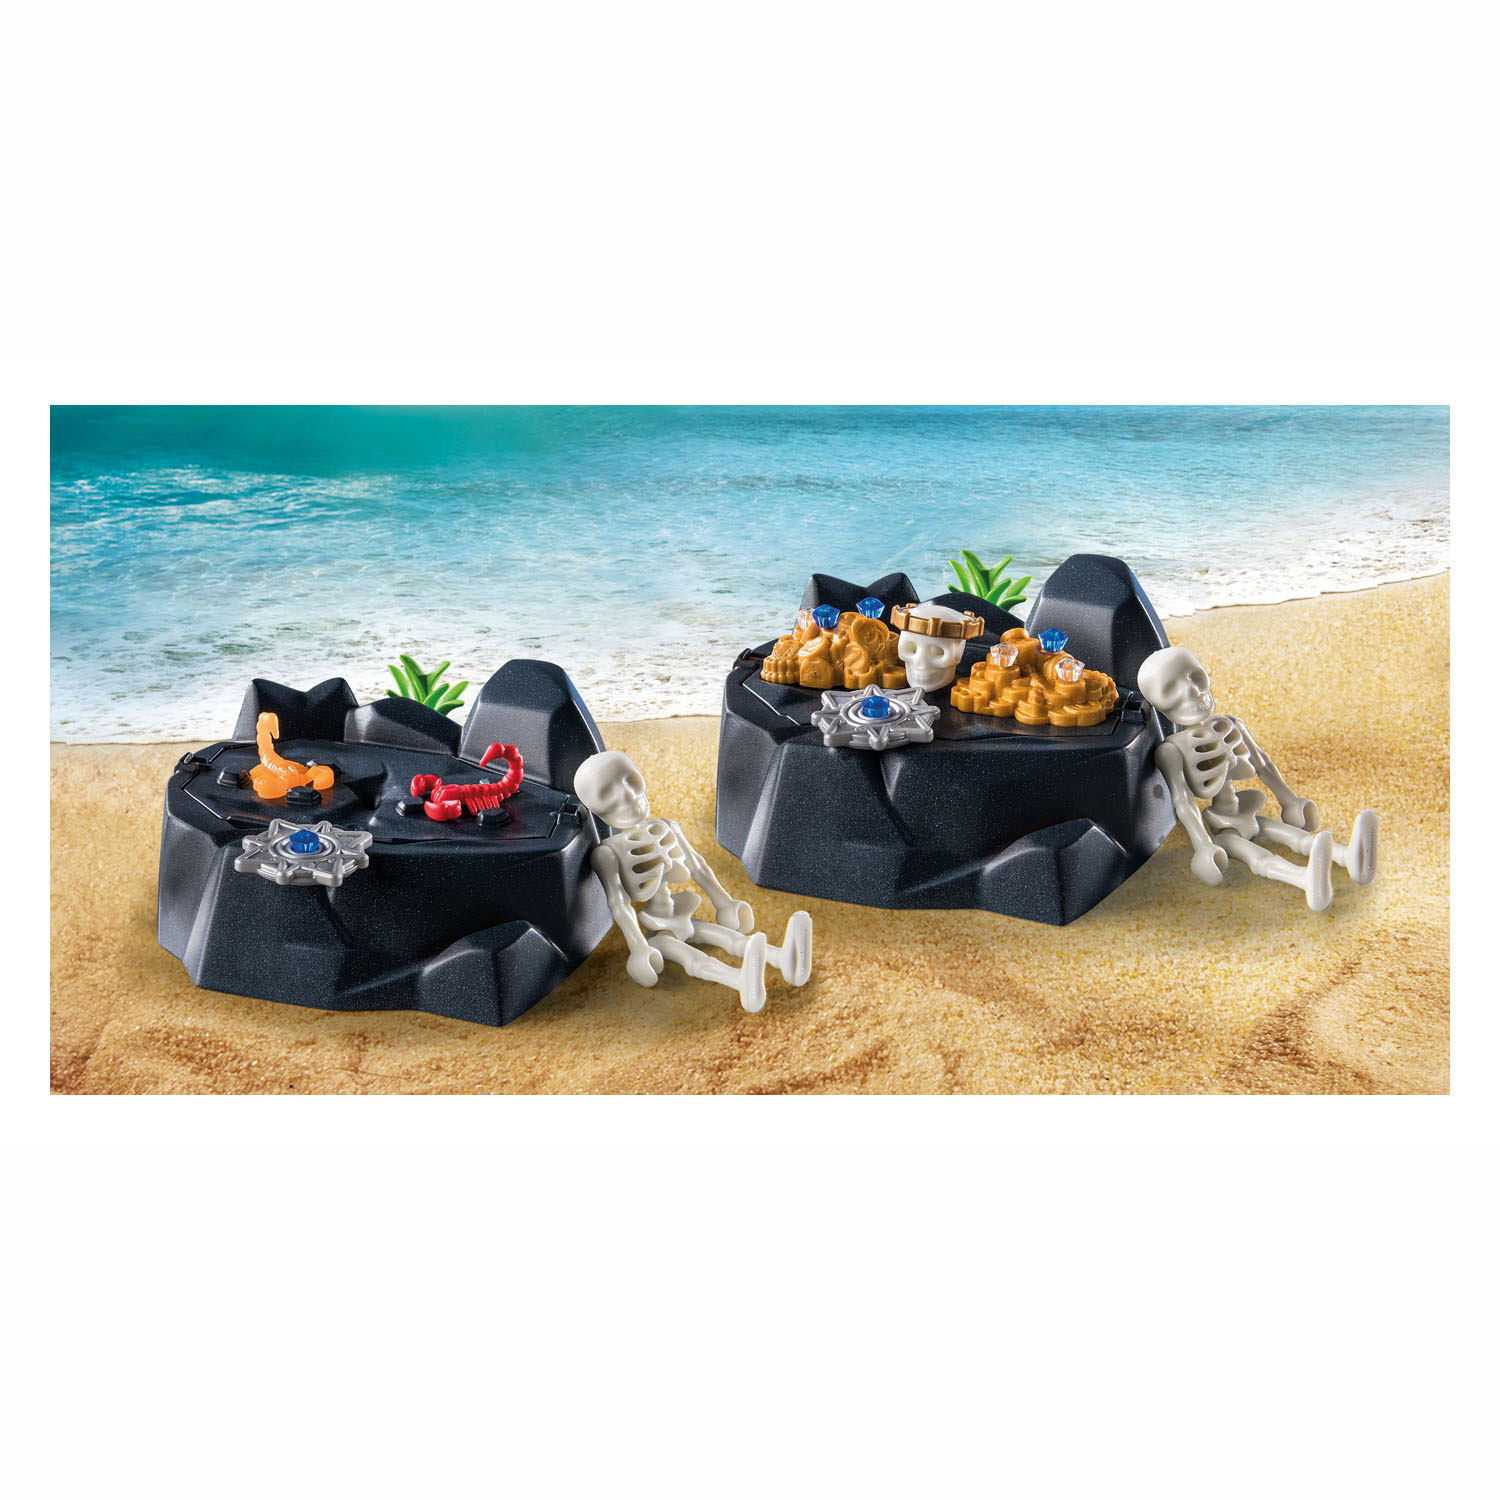 Playmobil Starterpack Pirate avec Barque - 71254